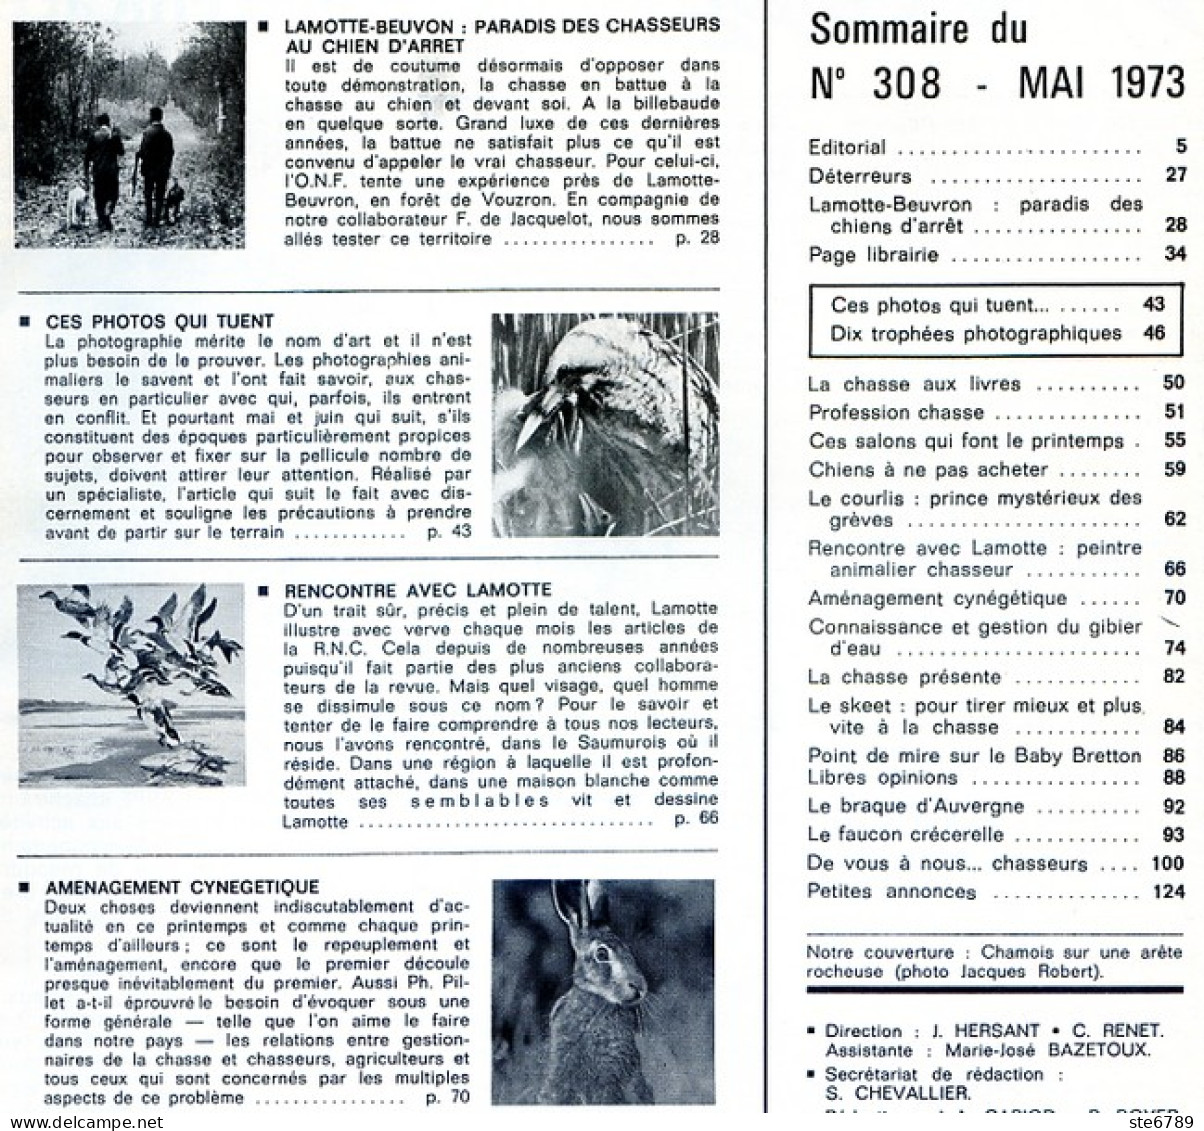 La Revue Nationale De LA CHASSE N° 308 Mai 1973 Lamotte Beuvon , Chasse Photo - Chasse & Pêche